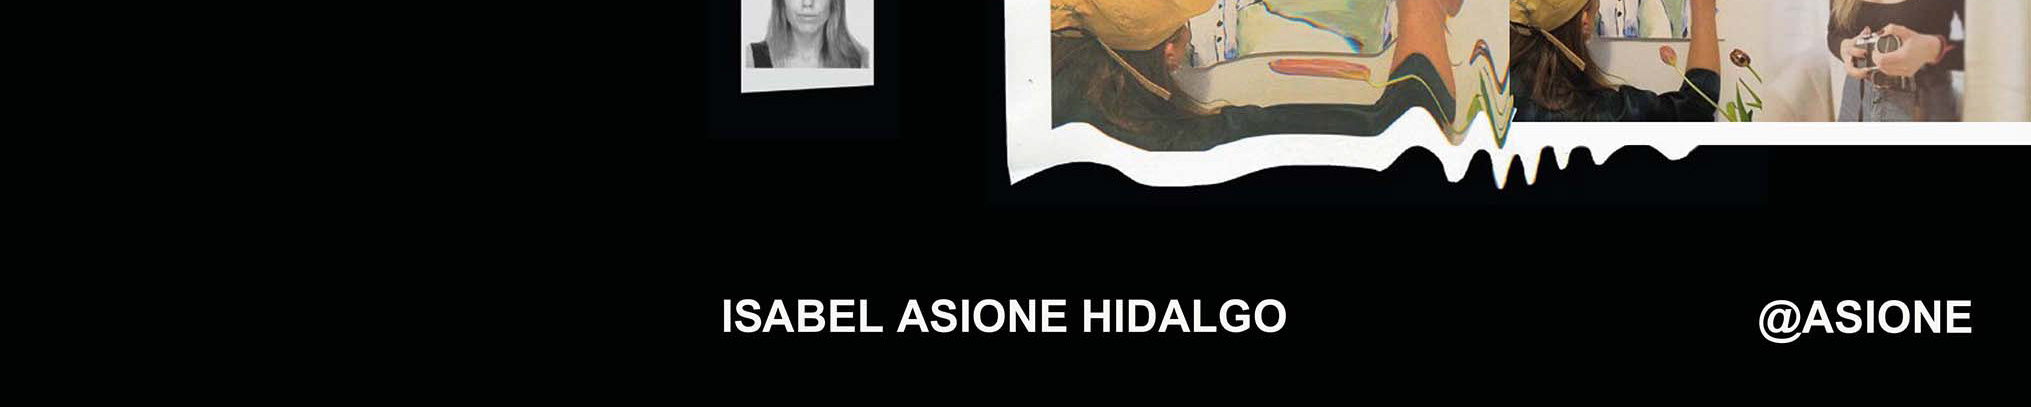 Isabel asione Hidalgo profil başlığı